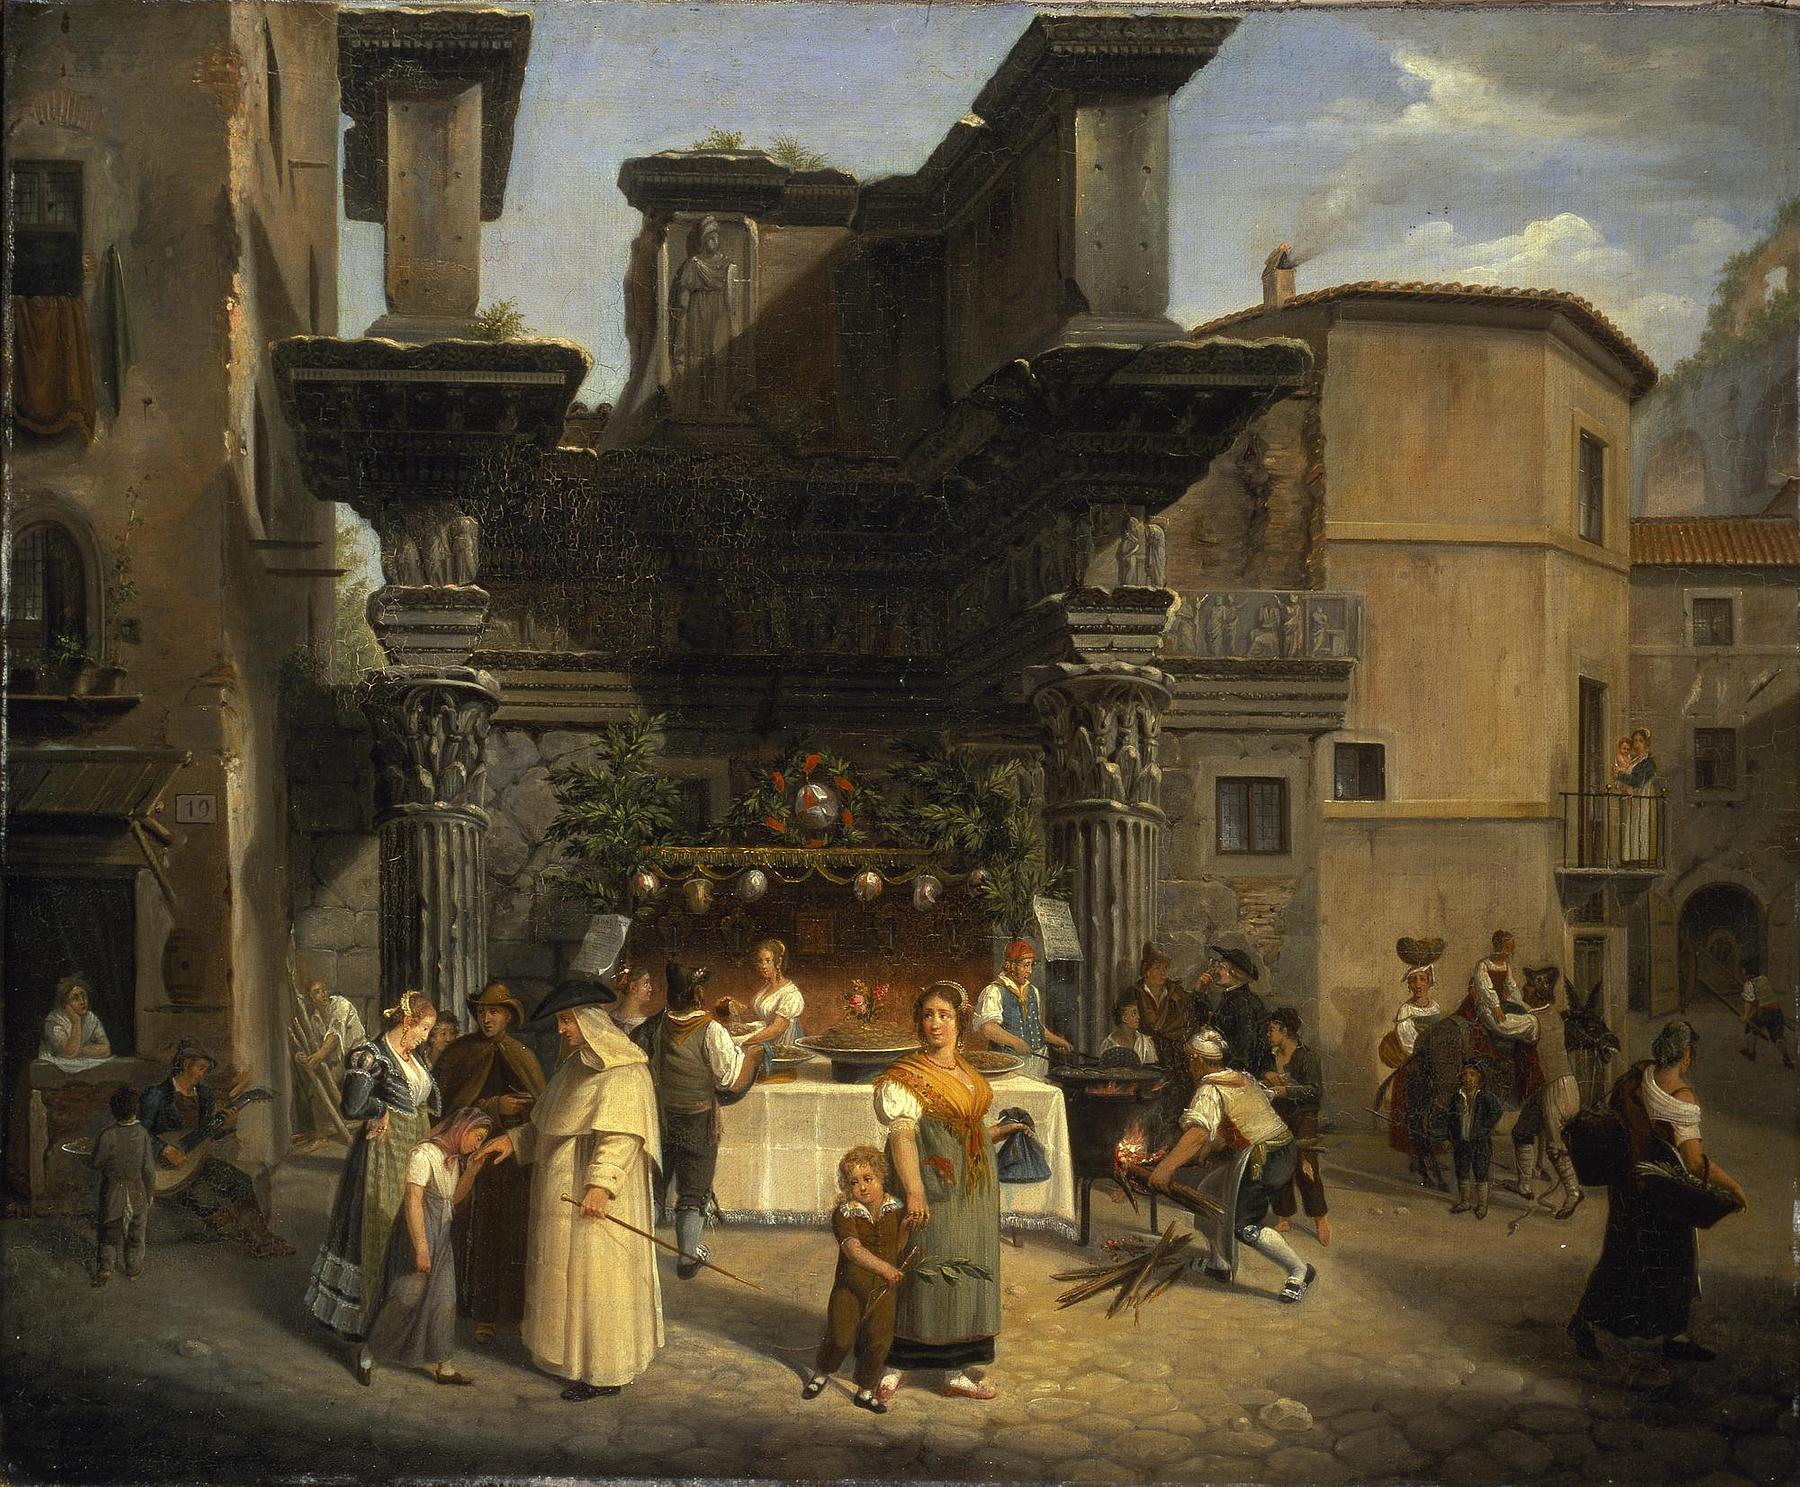 Saint Joseph's Day (March 19) in Rome, B72